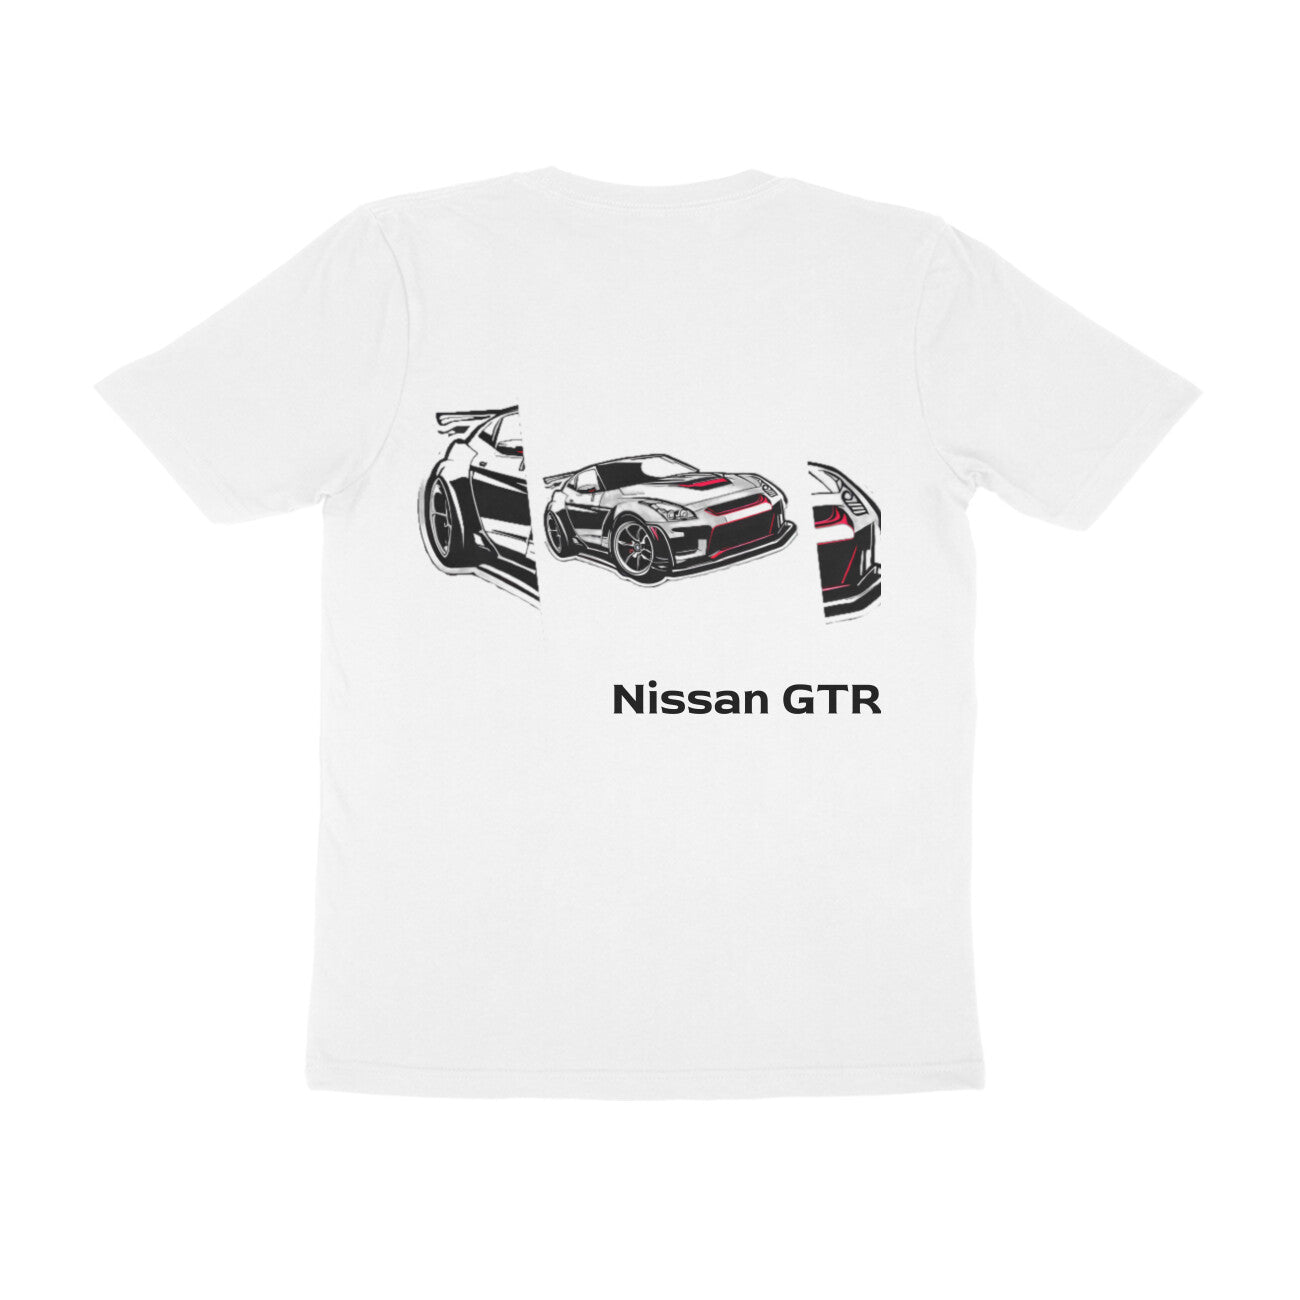 NISSAN GTR - GODZILLA - Tshirt - Kashiba Store